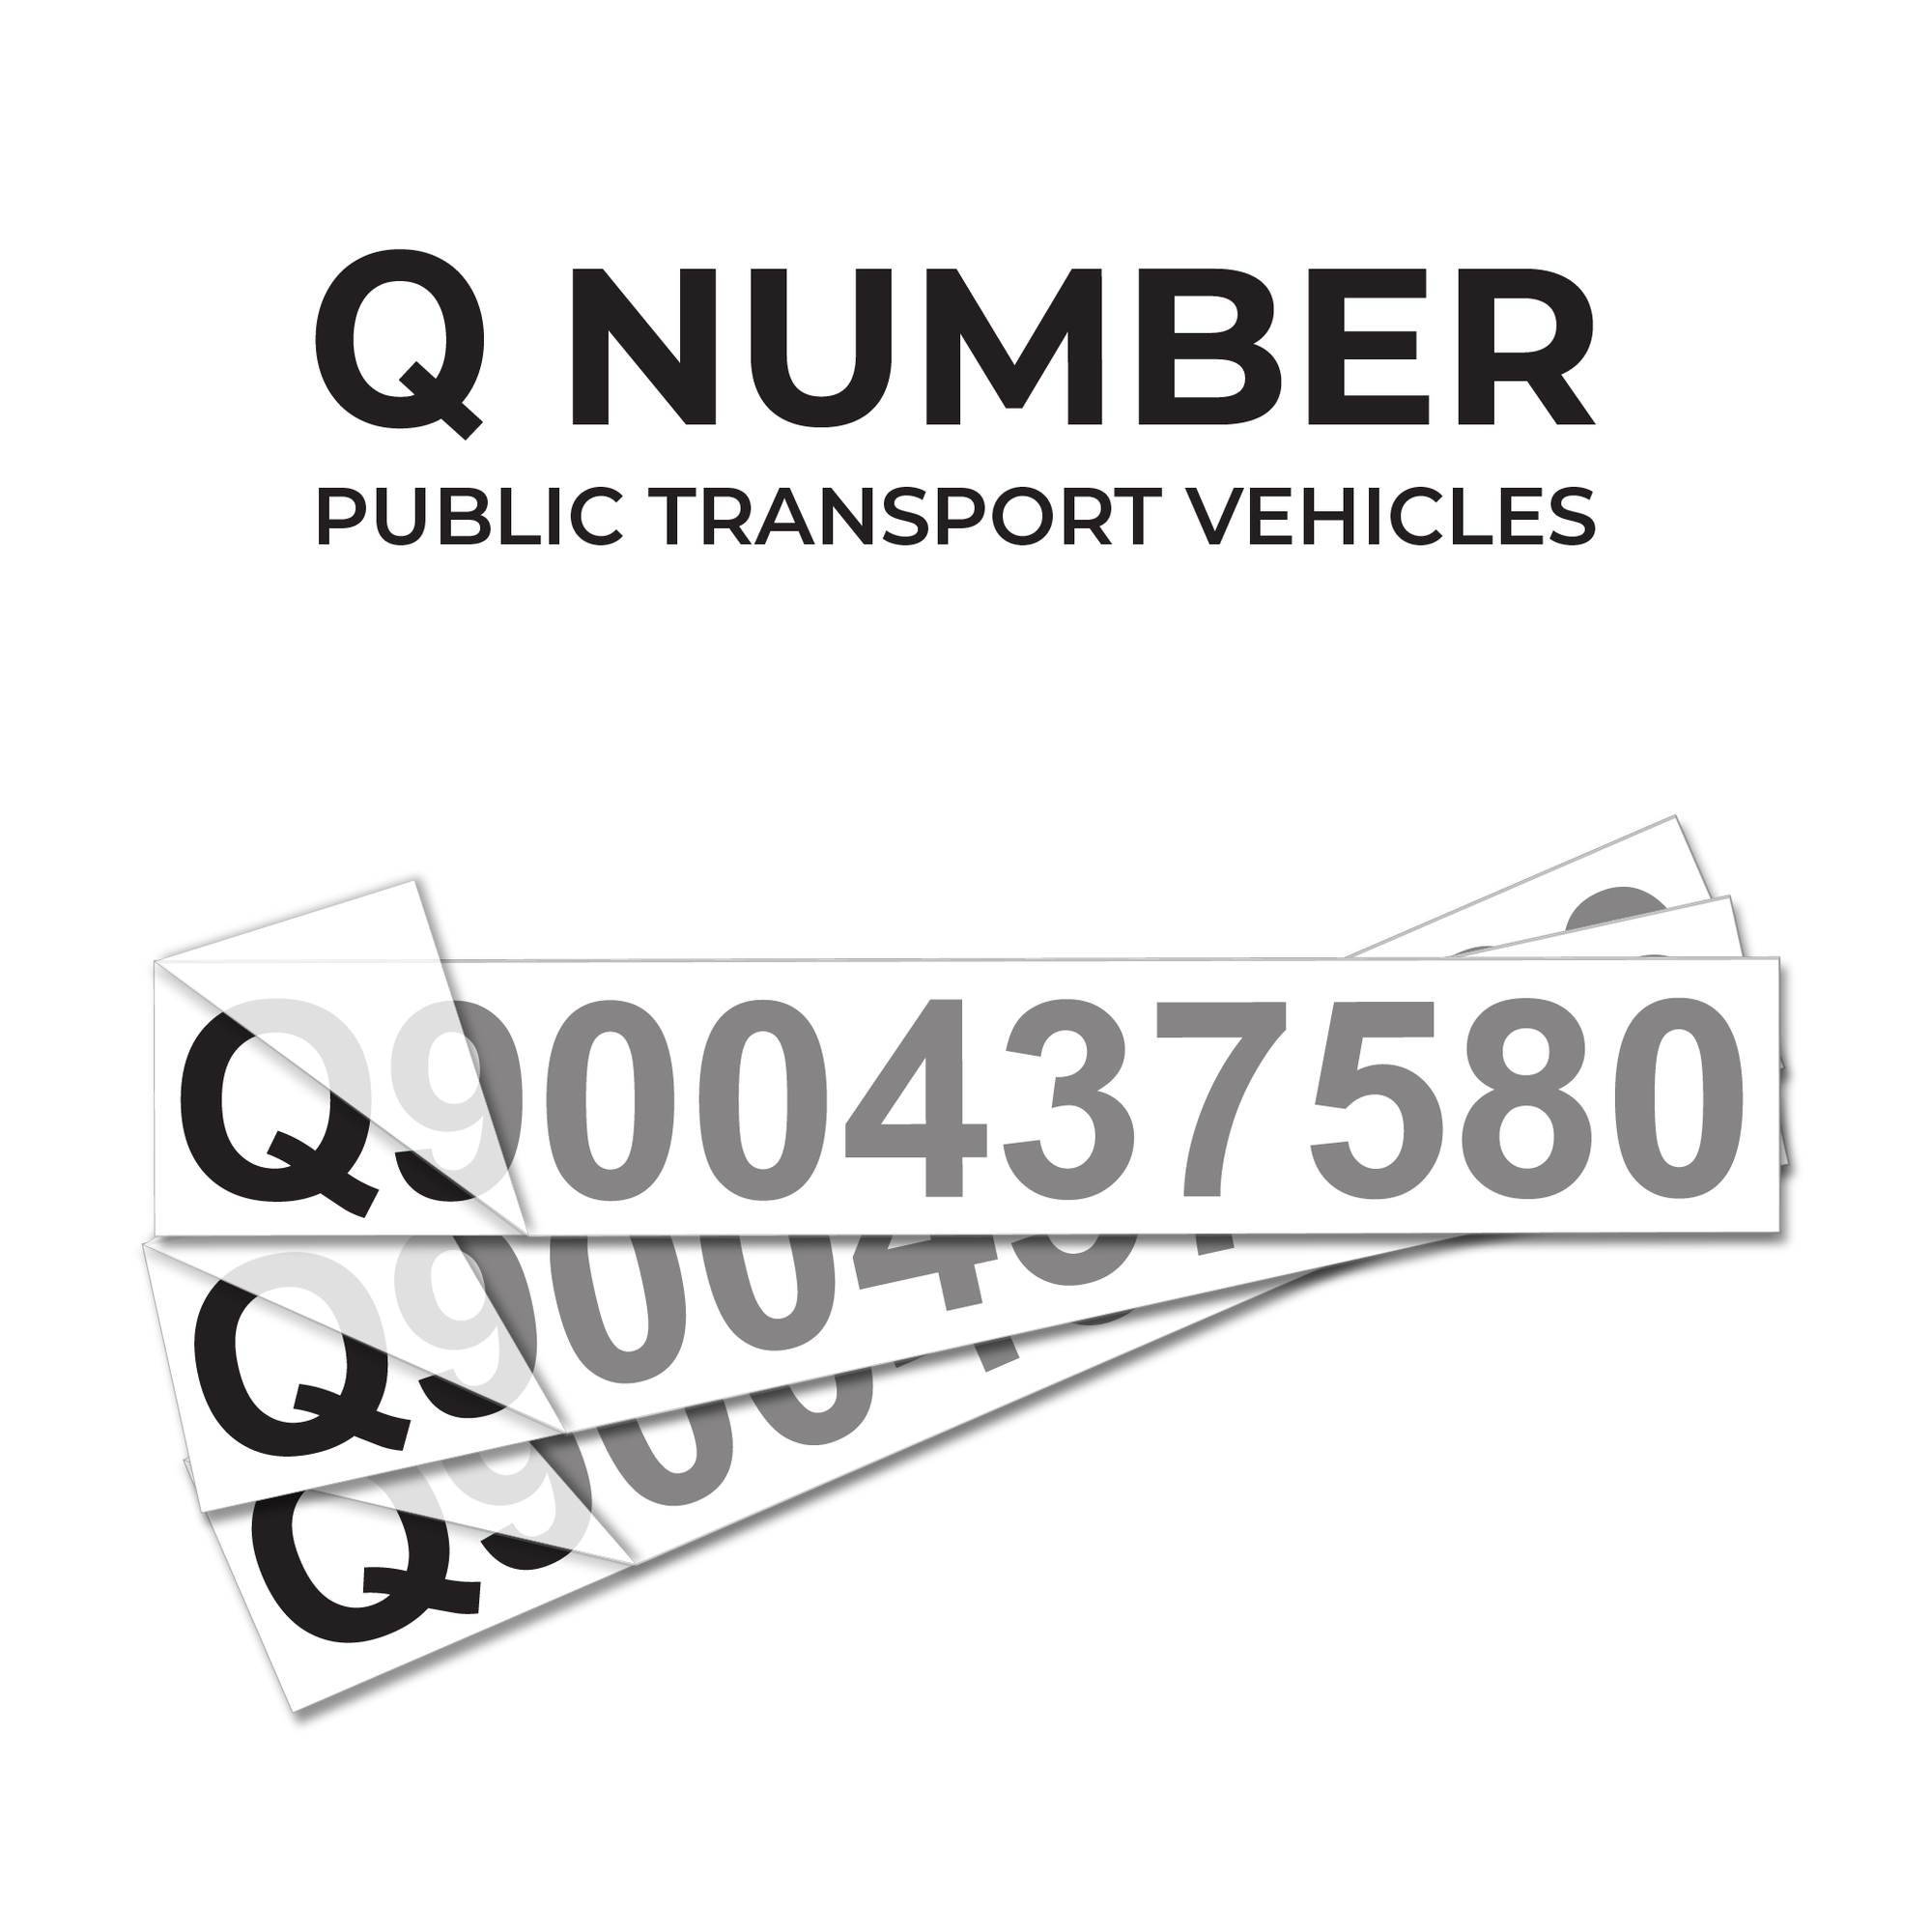 Q Number for Transport Vehicles